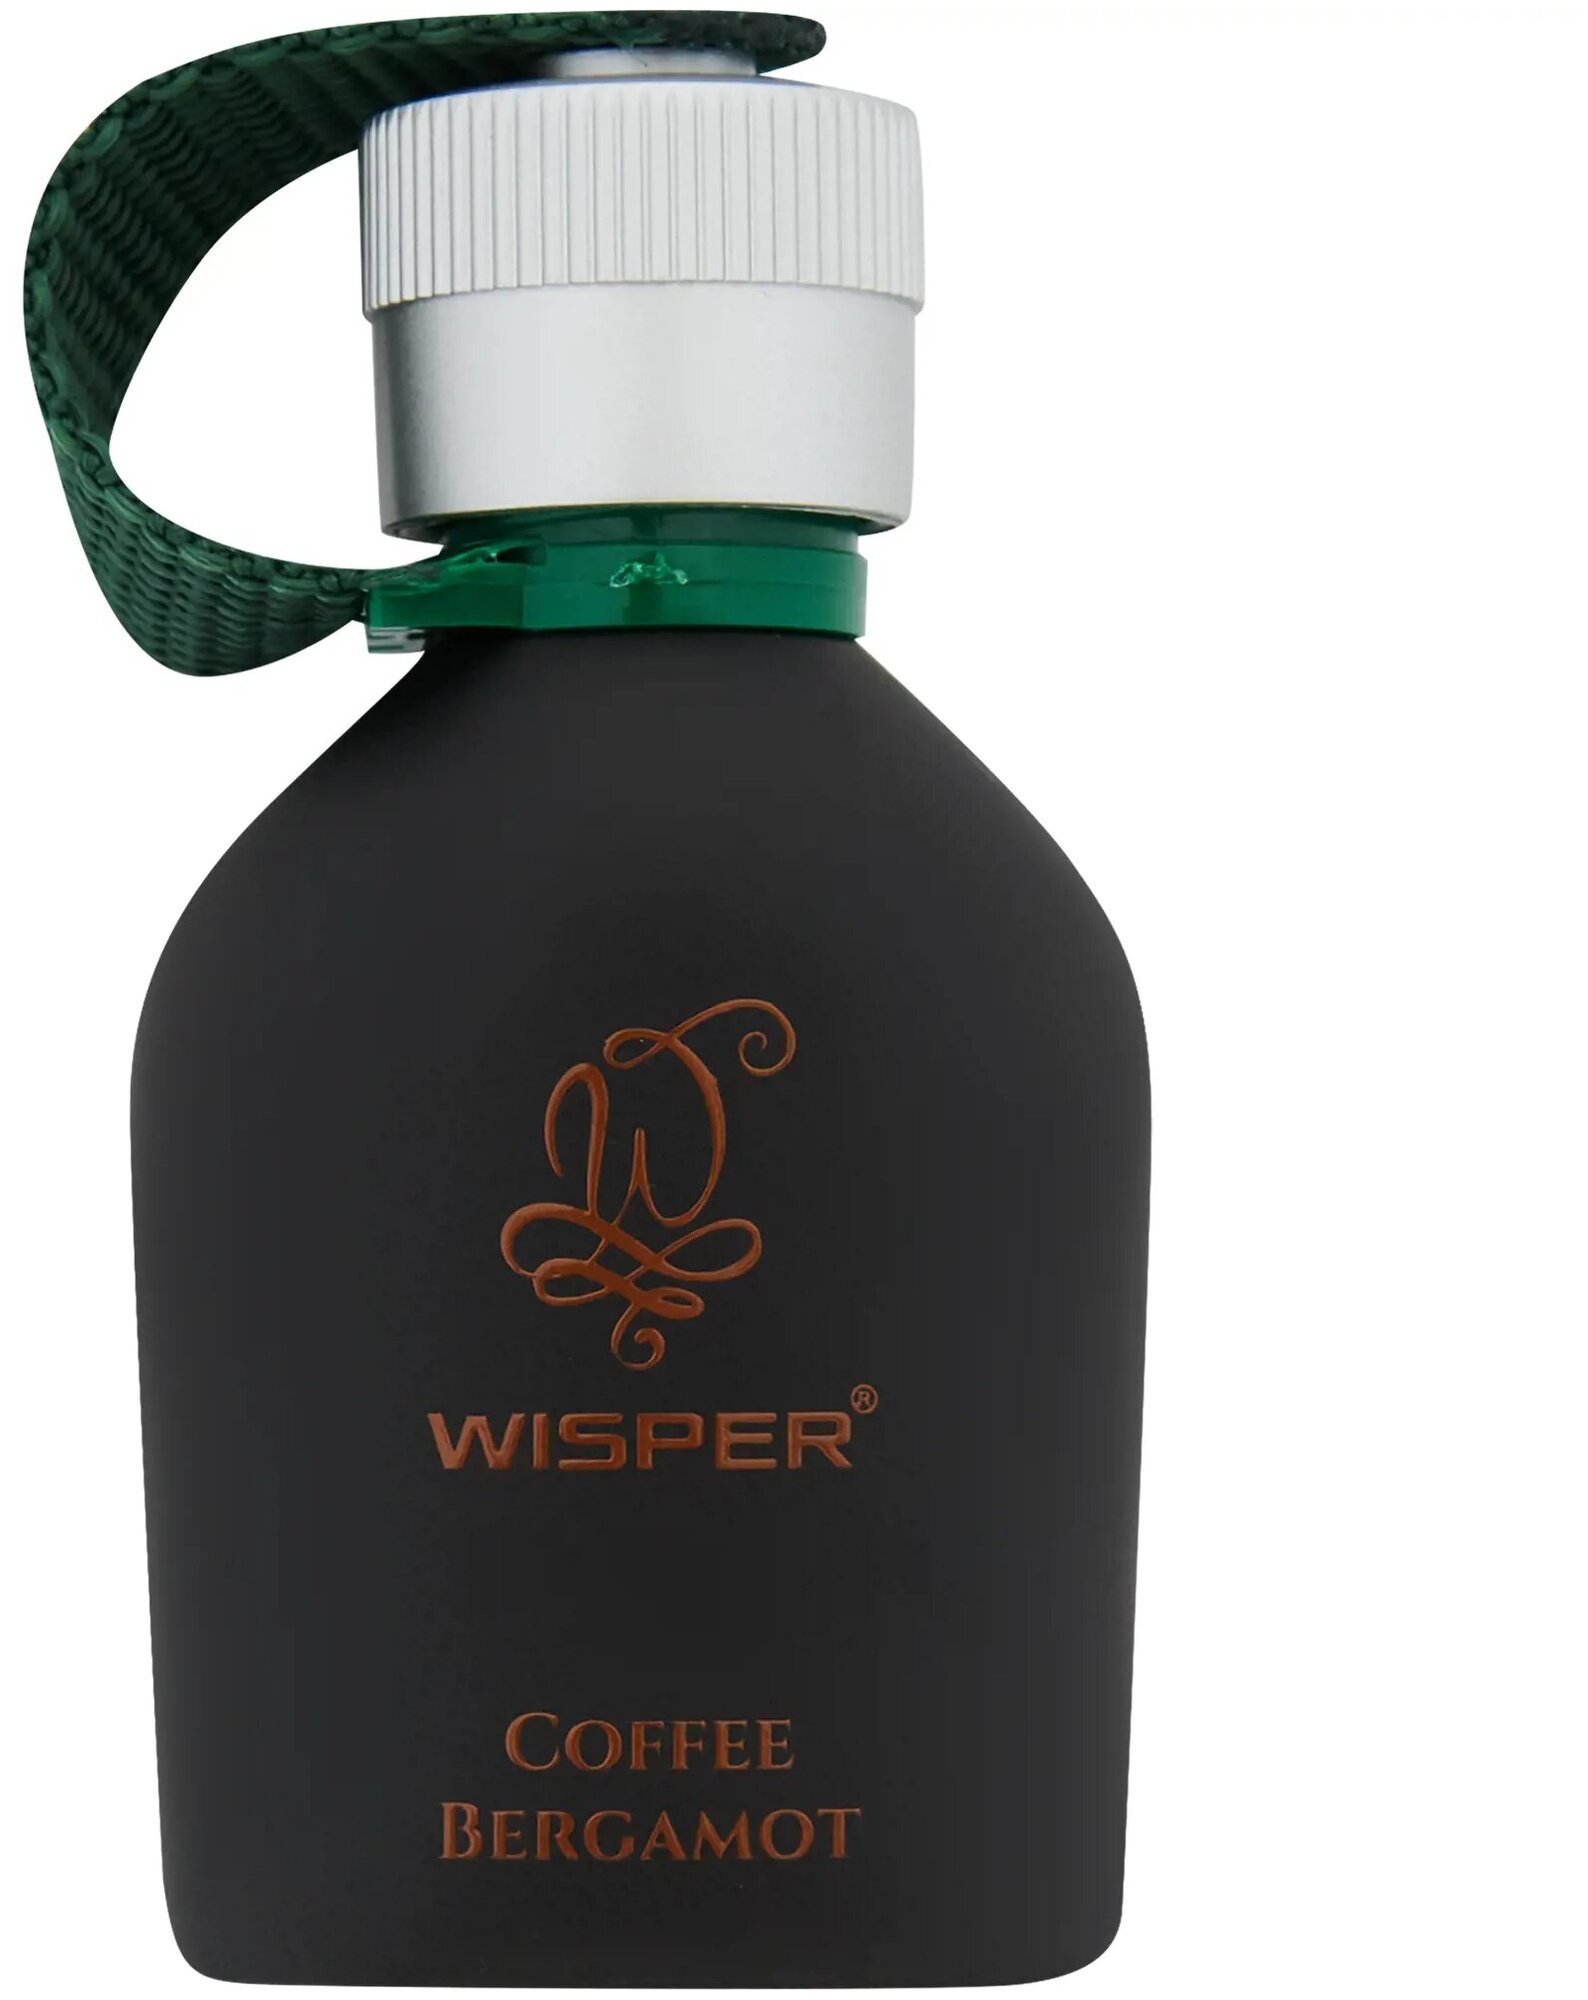 Автомобильный парфюм Wisper ароматизатор автопарфюм аромат Coffee Bergamot